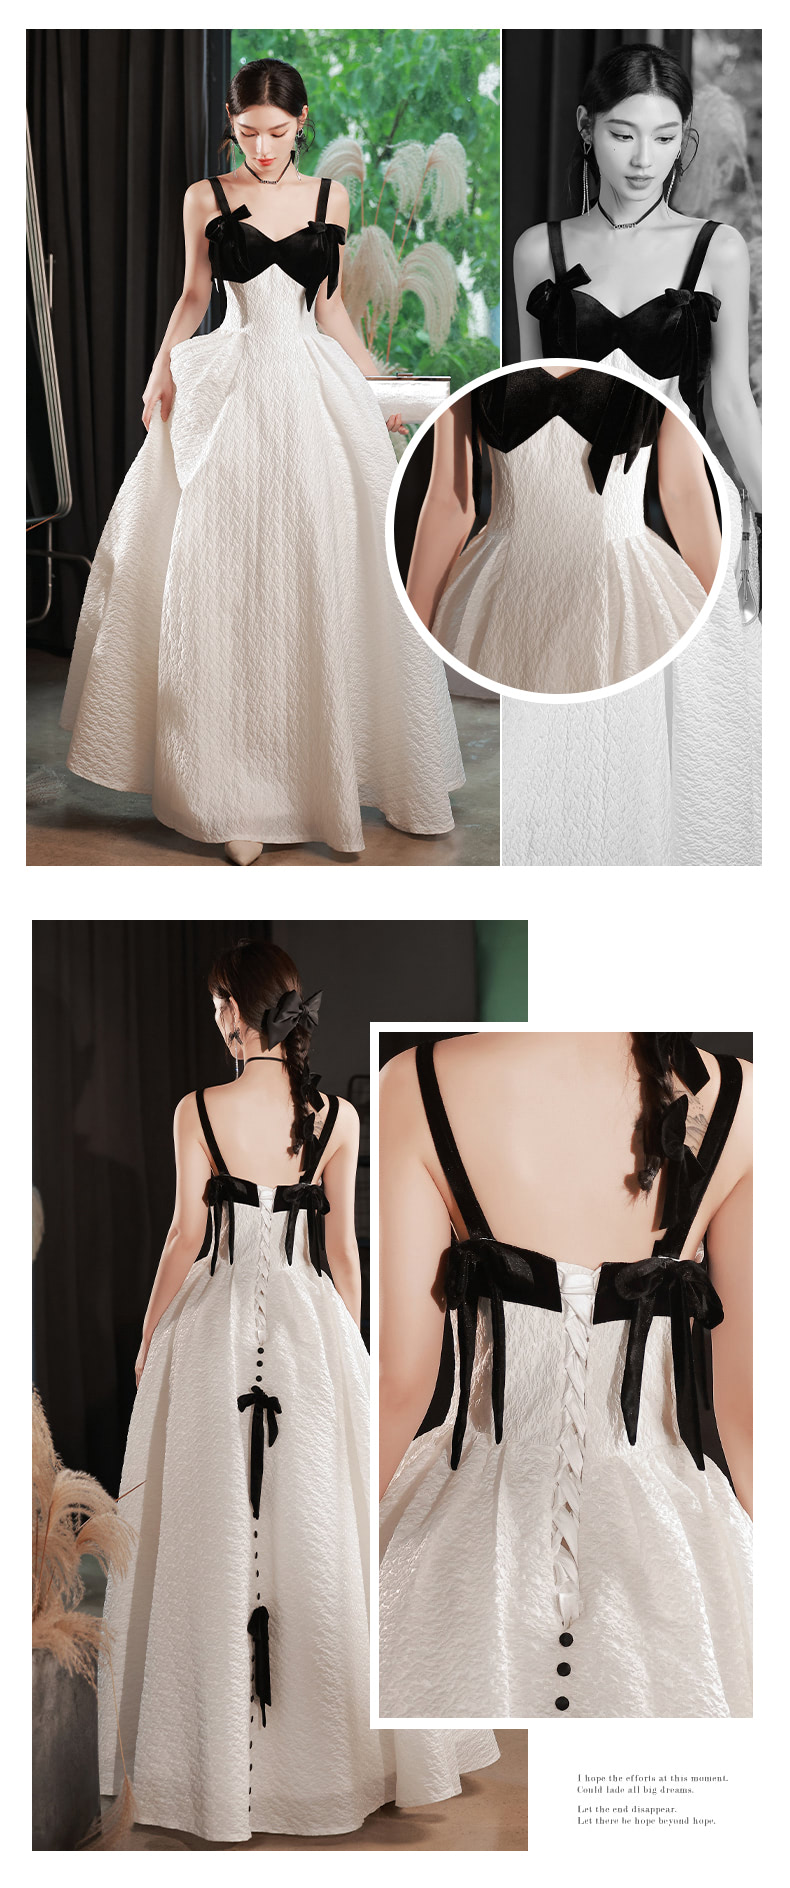 A-Line-Slip-Maxi-Evening-Dress-Boutique-Formal-Outfit-Plus-Size10.jpg